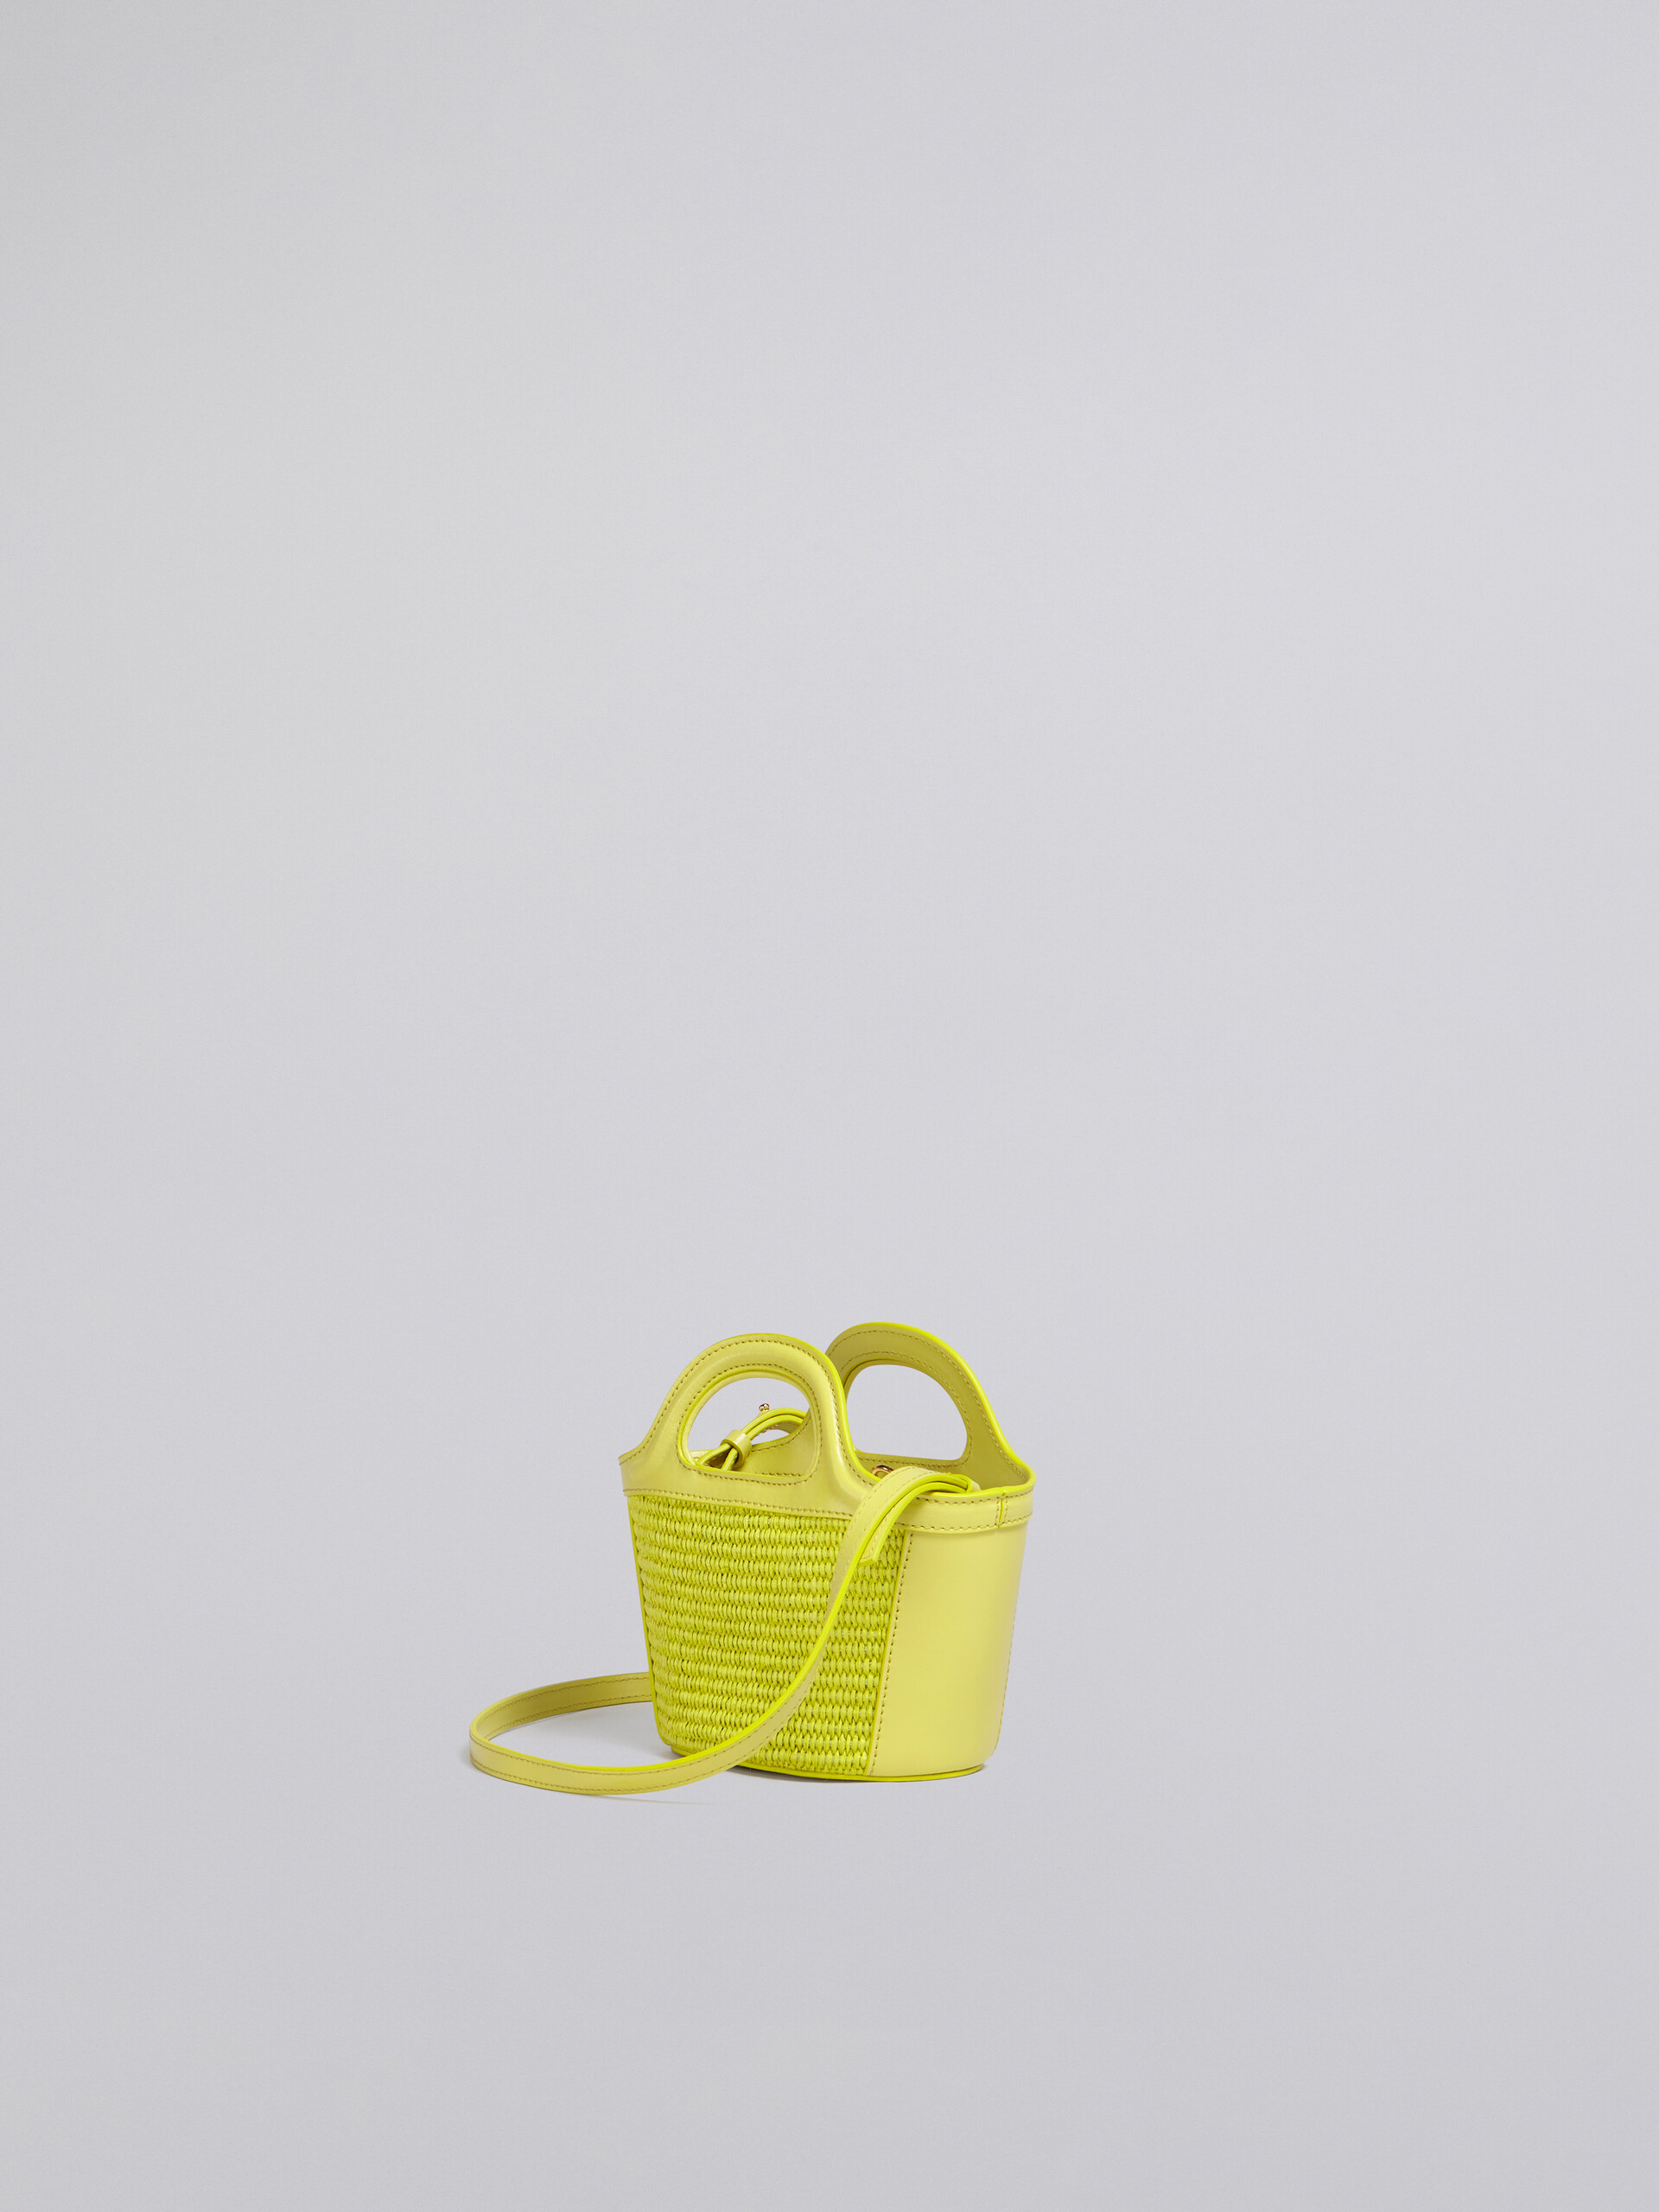 TROPICALIA micro bag in yellow leather and raffia - Handbags - Image 3